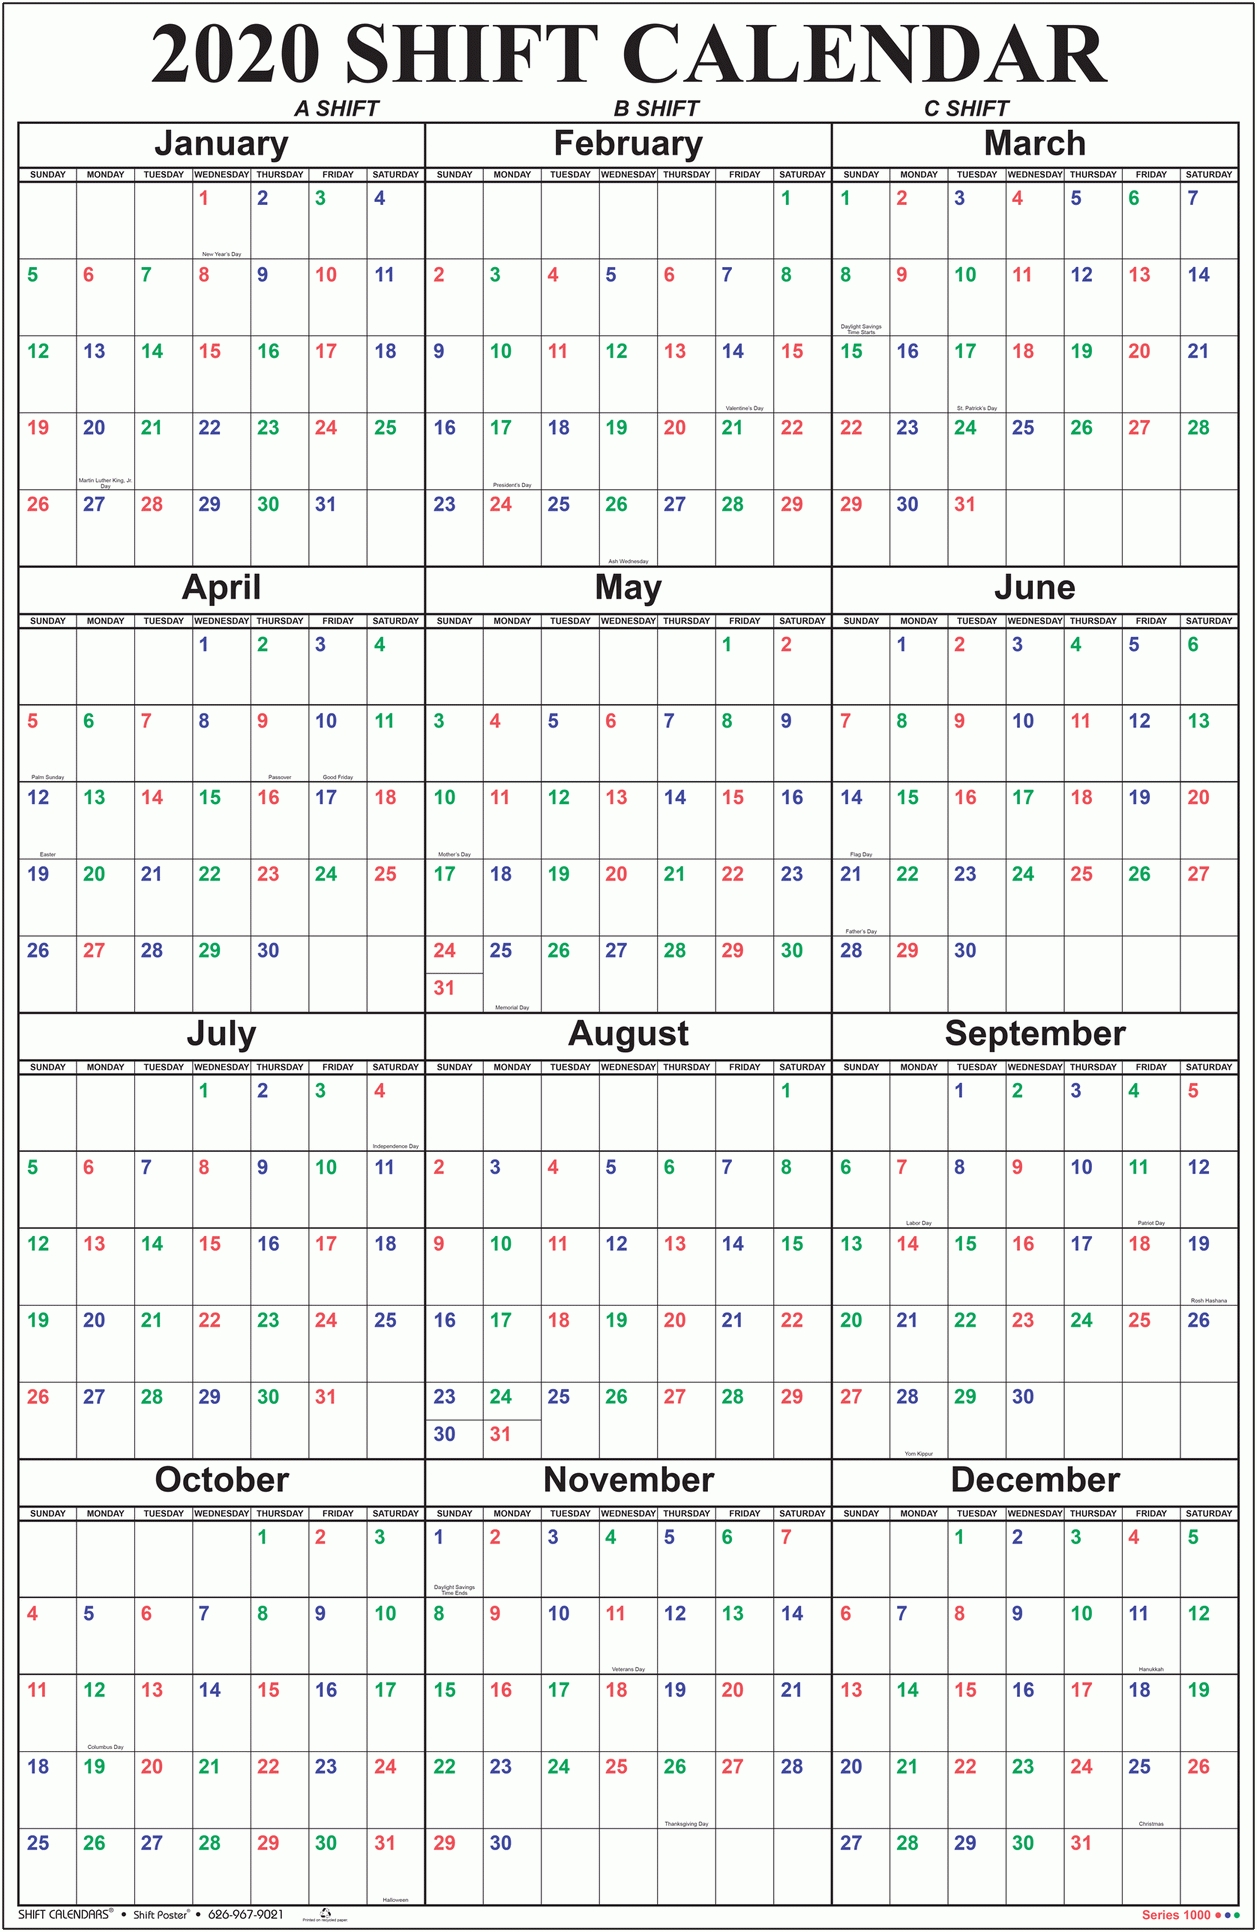 Shift Calendars with 12 Hour Shift Calendar 2020